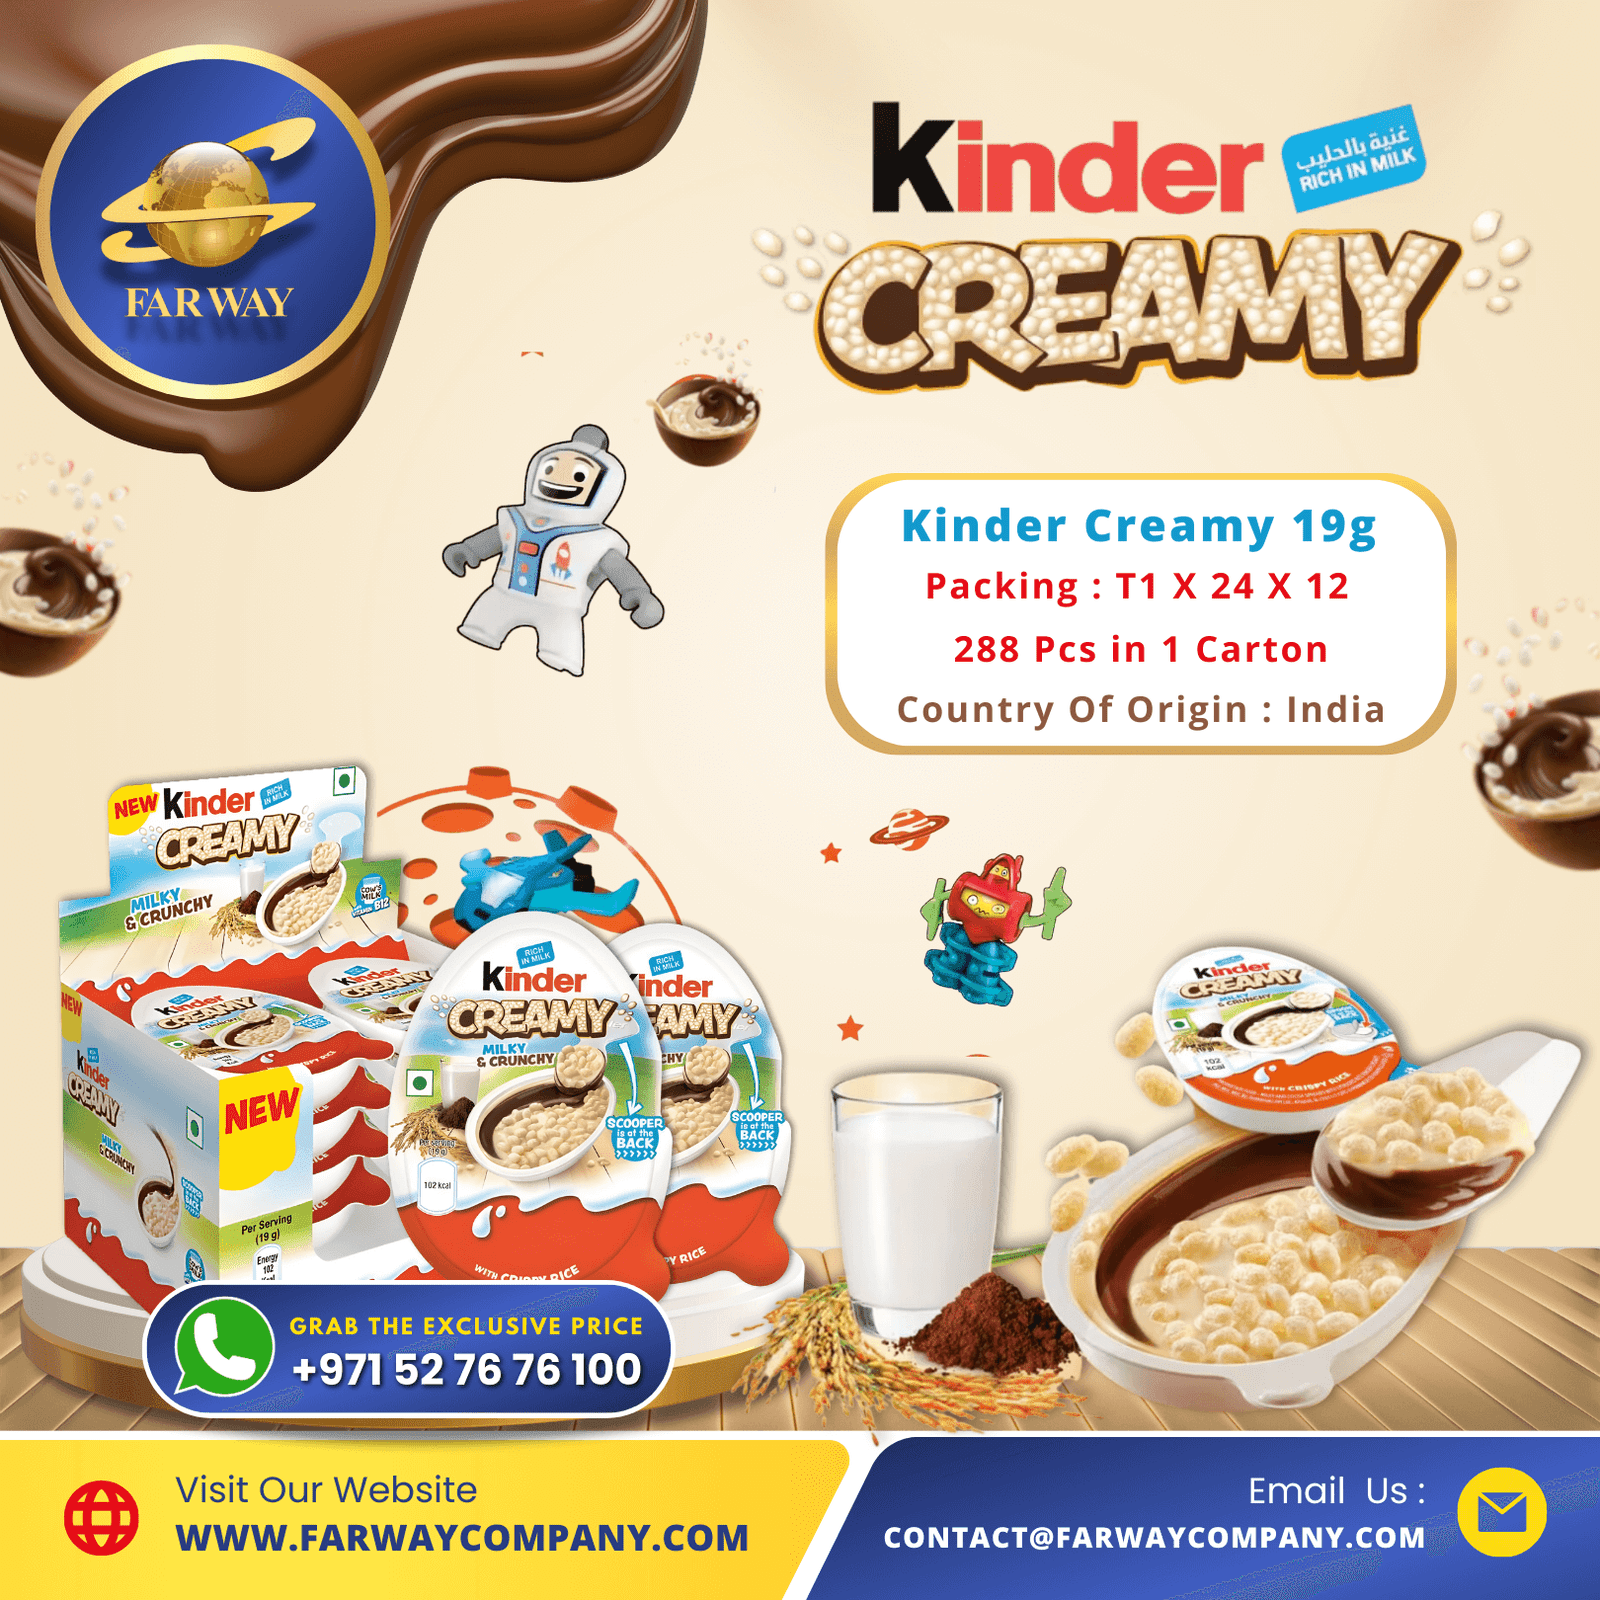 Kinder Creamy Importer & Exporter in Dubai, UAE, Middle East